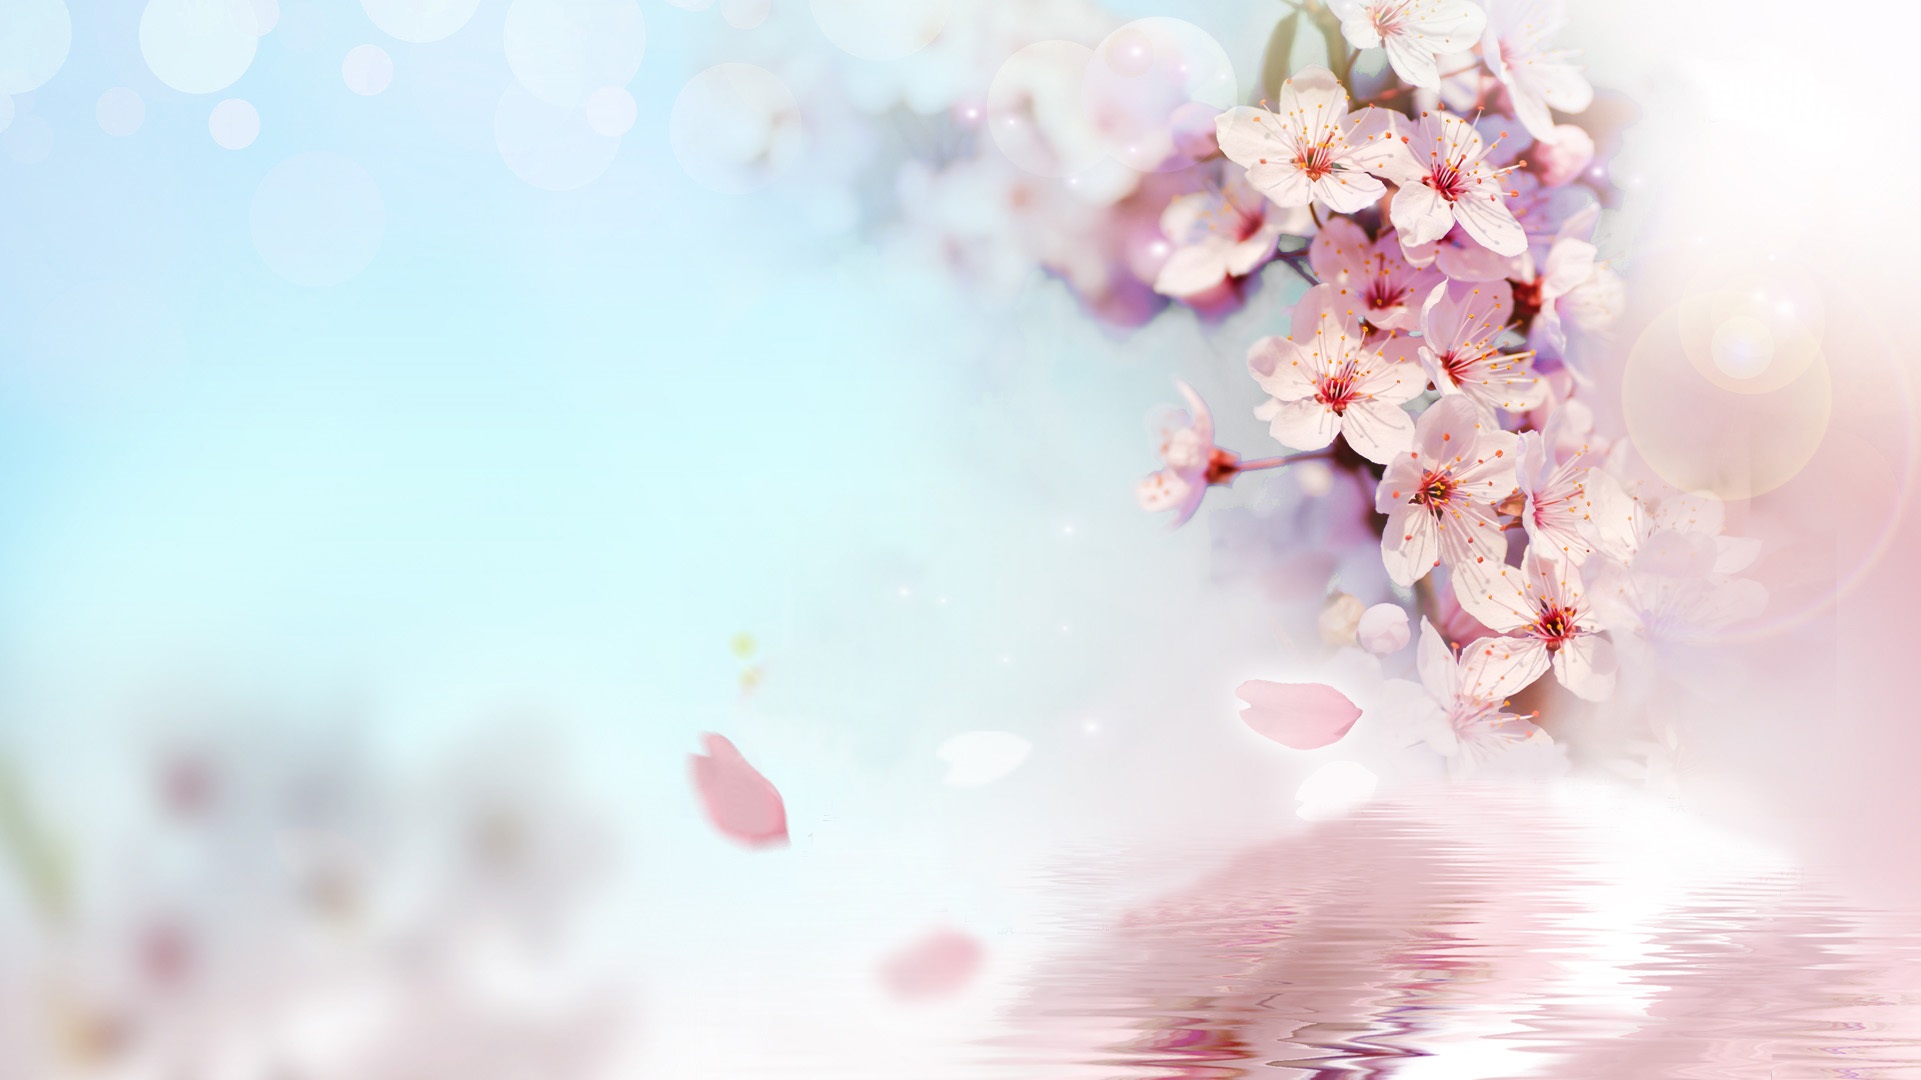 flower wallpaper hd download free,blossom,pink,flower,cherry blossom,spring